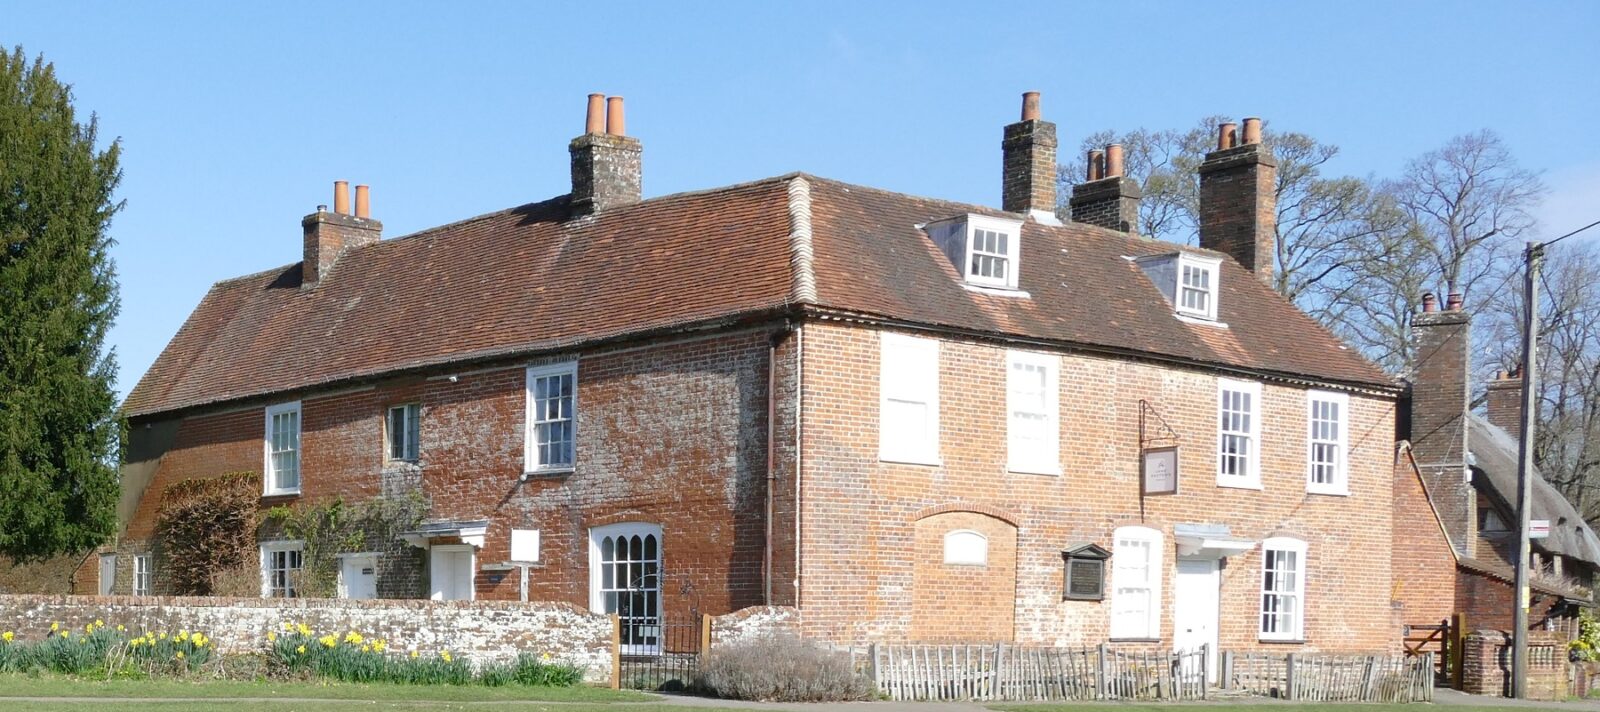 Jane Austen's House in the sunshine